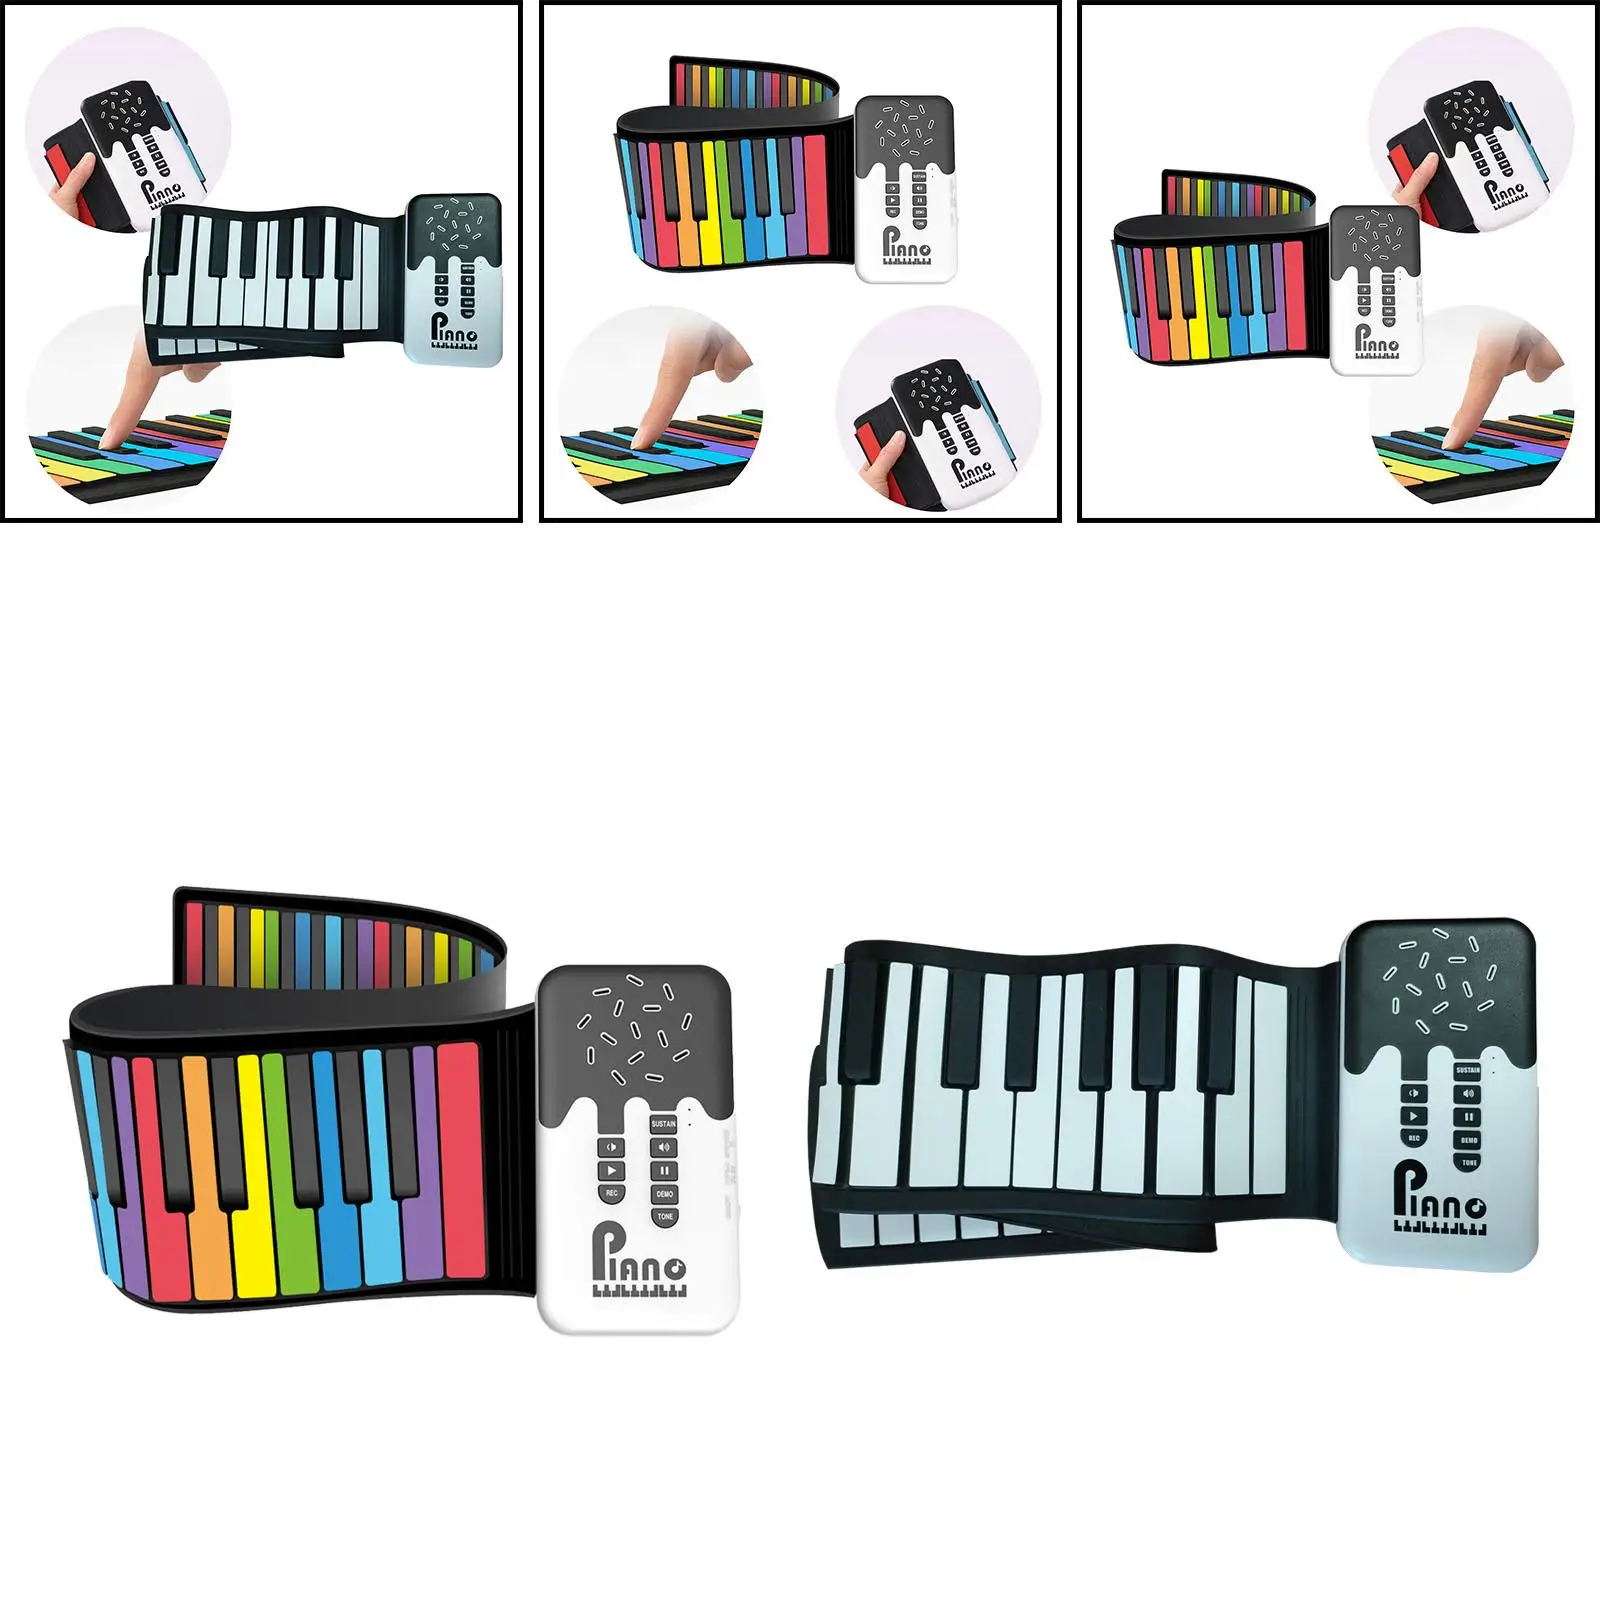 

Roll up Piano Rechargeable Lightweight Hand Roll Piano Portable Piano Roll Out Piano Keyboard for Kids Adults Beginner Children